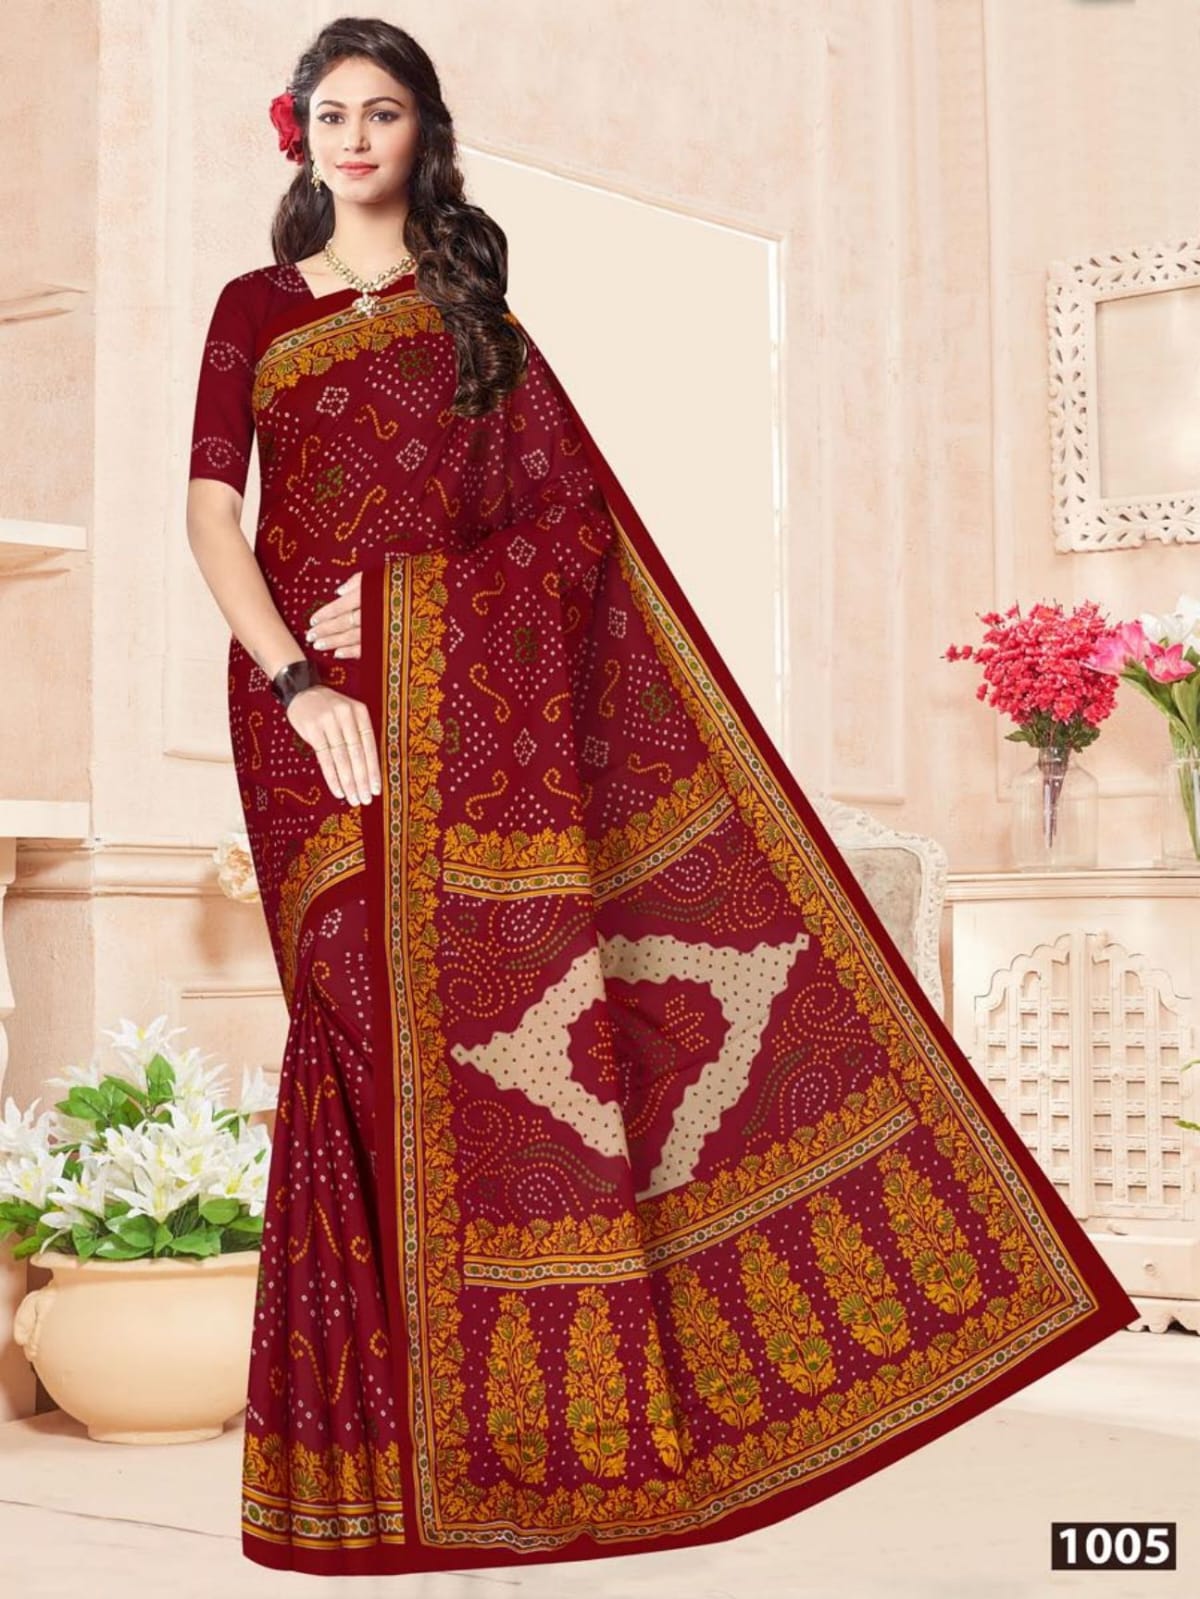 Latest 4 bandhani saree designs - Traditional Bandhani sarees - Heavy Bandhani  saree designs